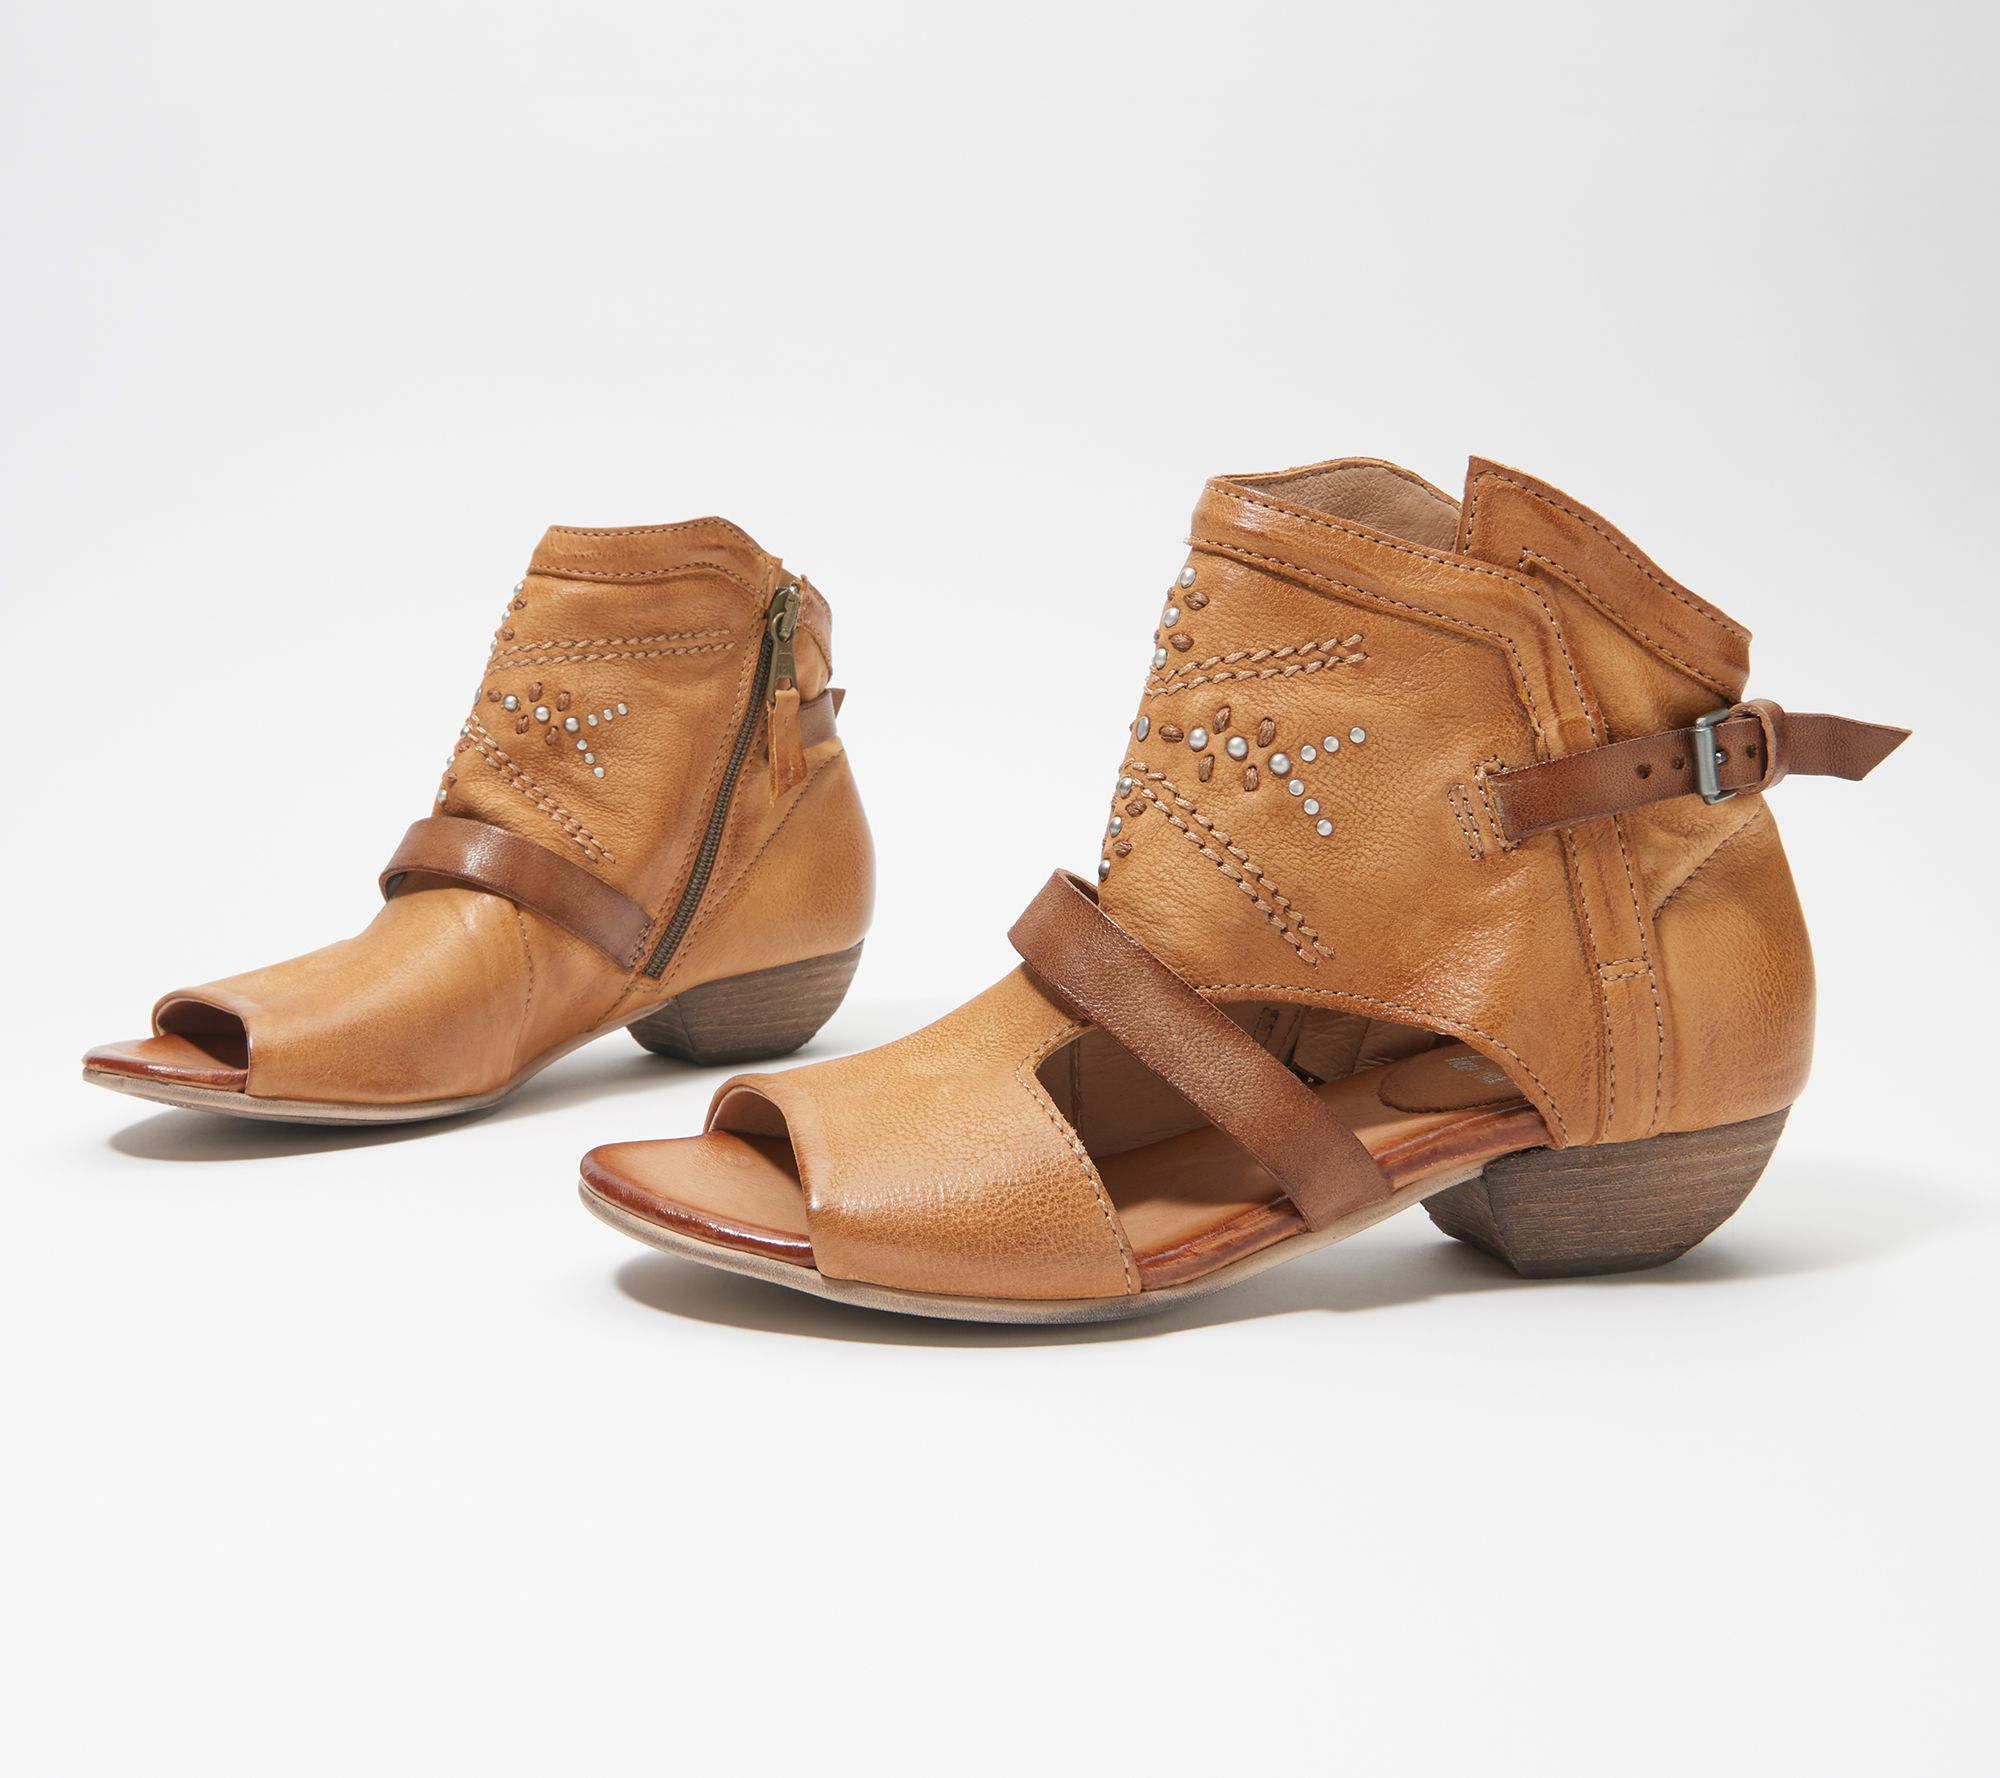 Miz Mooz Leather Heeled Sandals- Caleb 